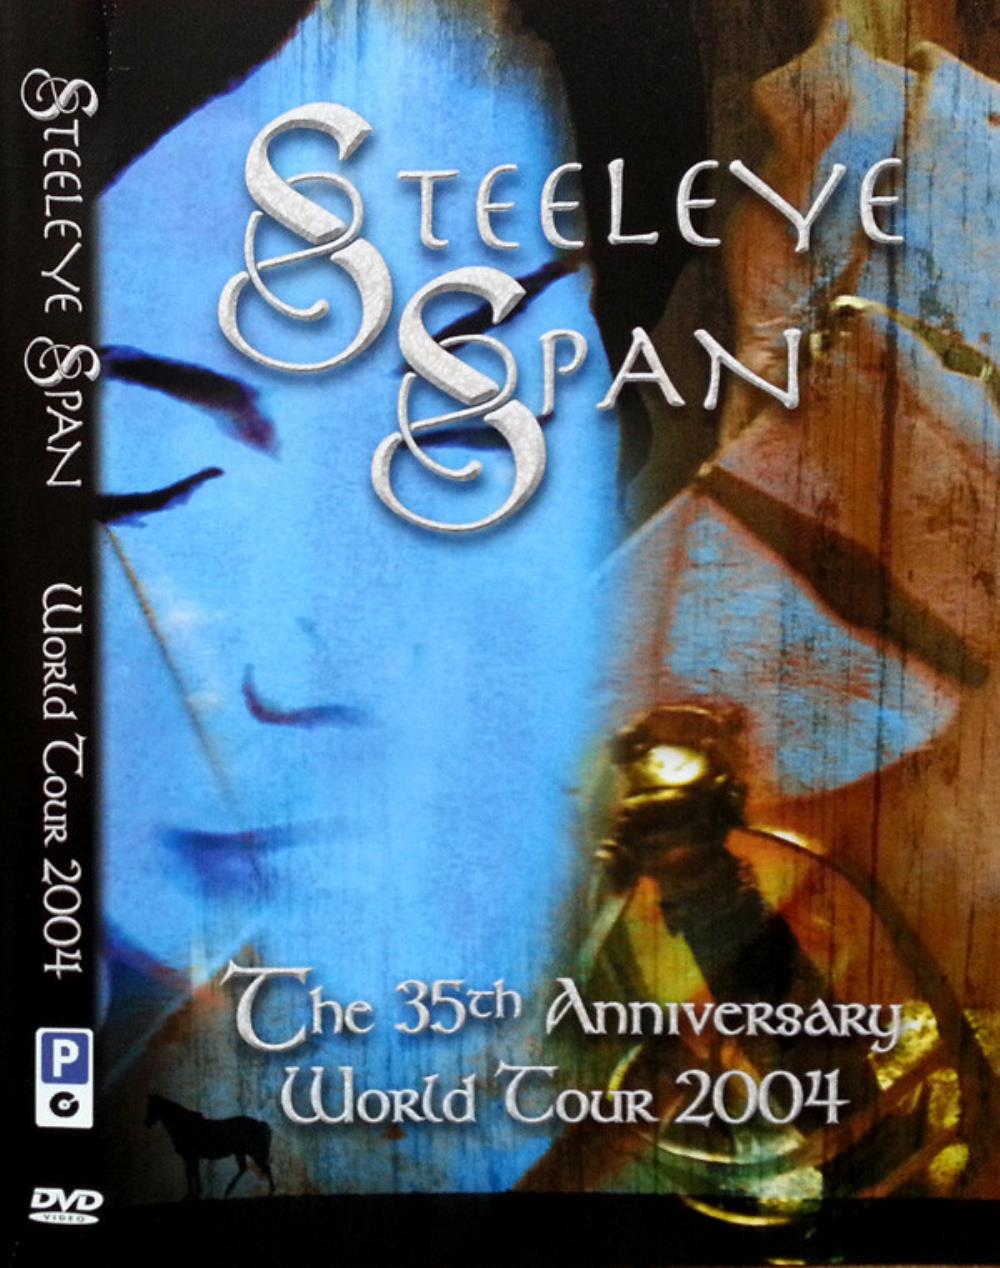 Steeleye Span - The 35th Anniversary World Tour 2004 CD (album) cover